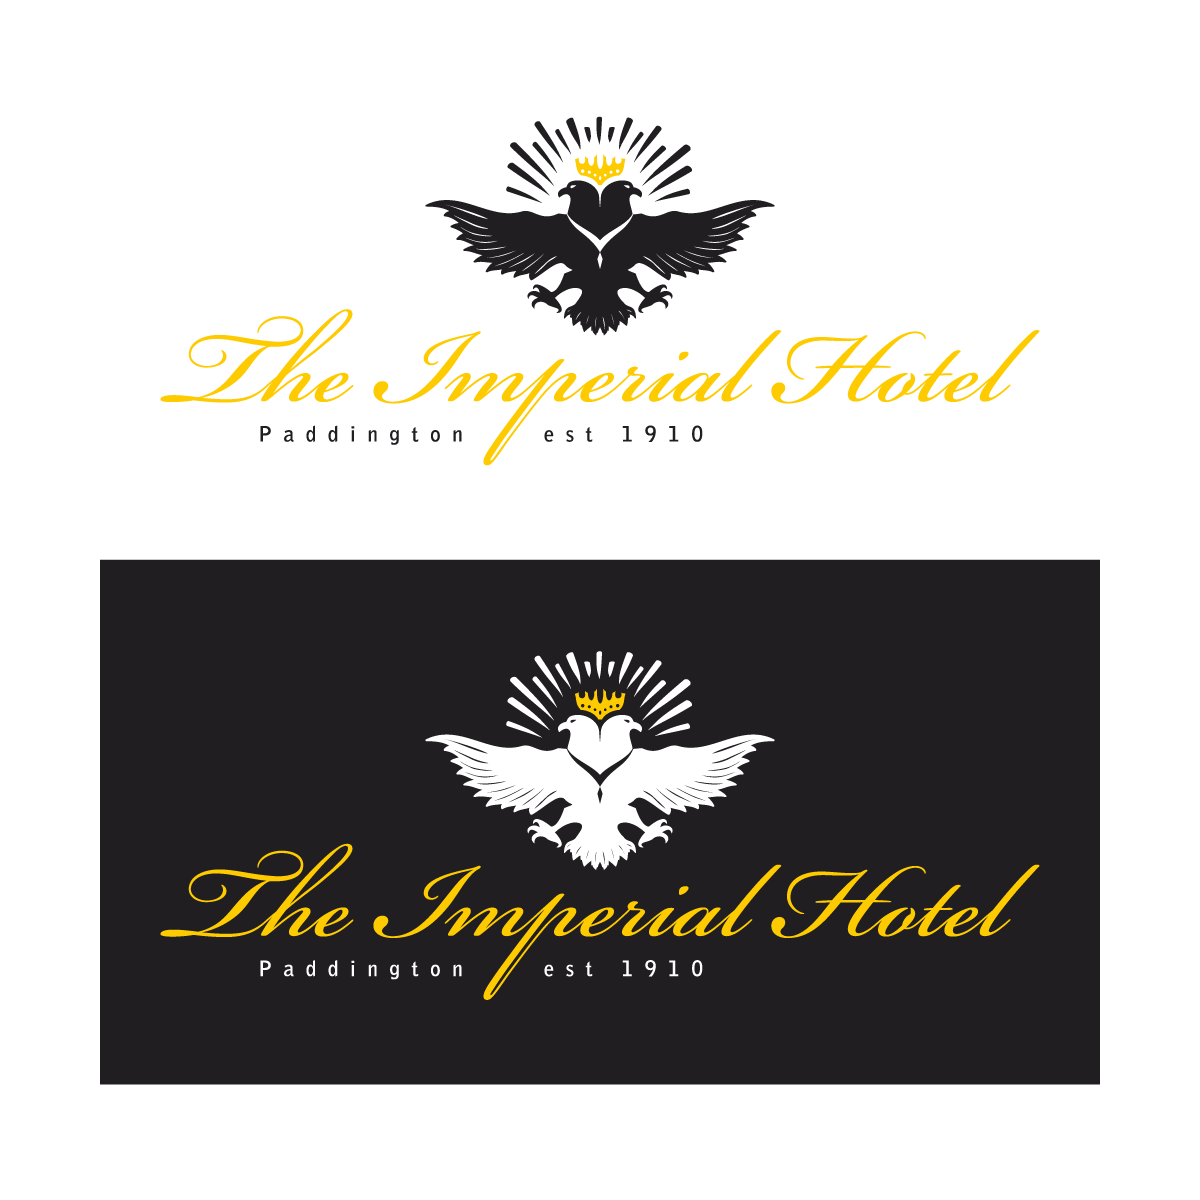 Logotype logo corporate eagle bird hotel imperial Australia 2 heads crown wings